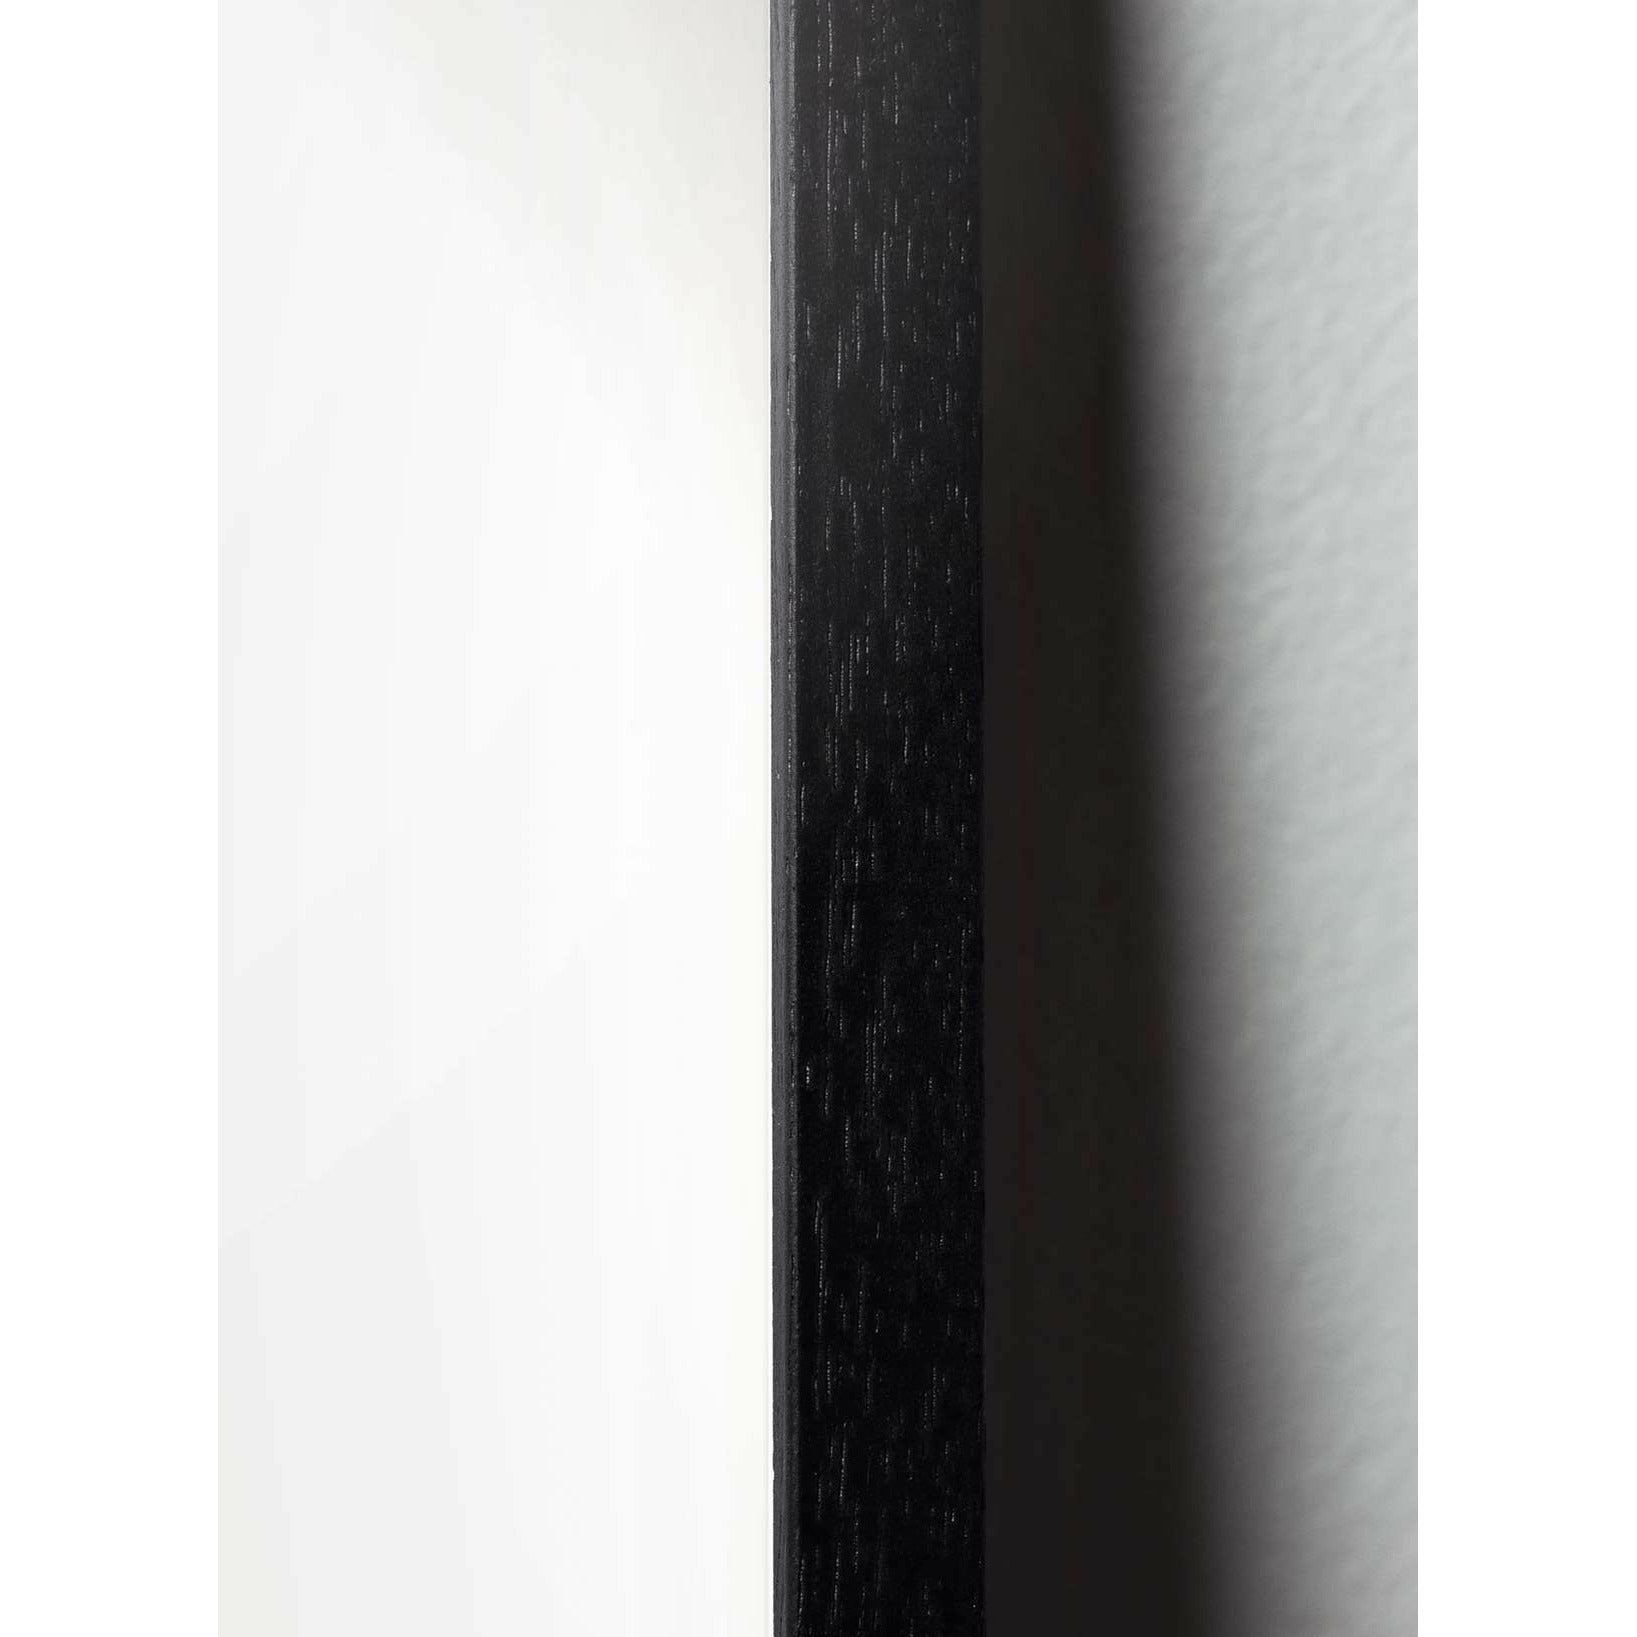 brainchild Eierfiguren Poster, frame gemaakt van zwart gelakt hout 30x40 cm, bruin